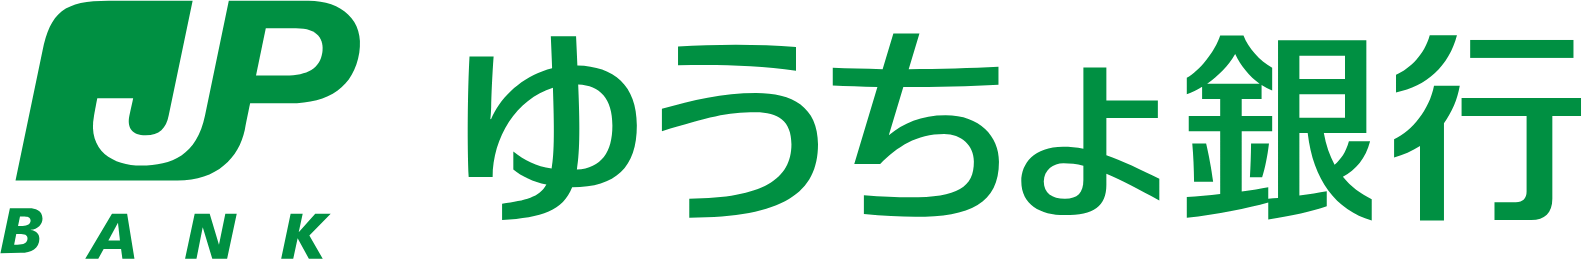 Japan Post Bank
 logo large (transparent PNG)